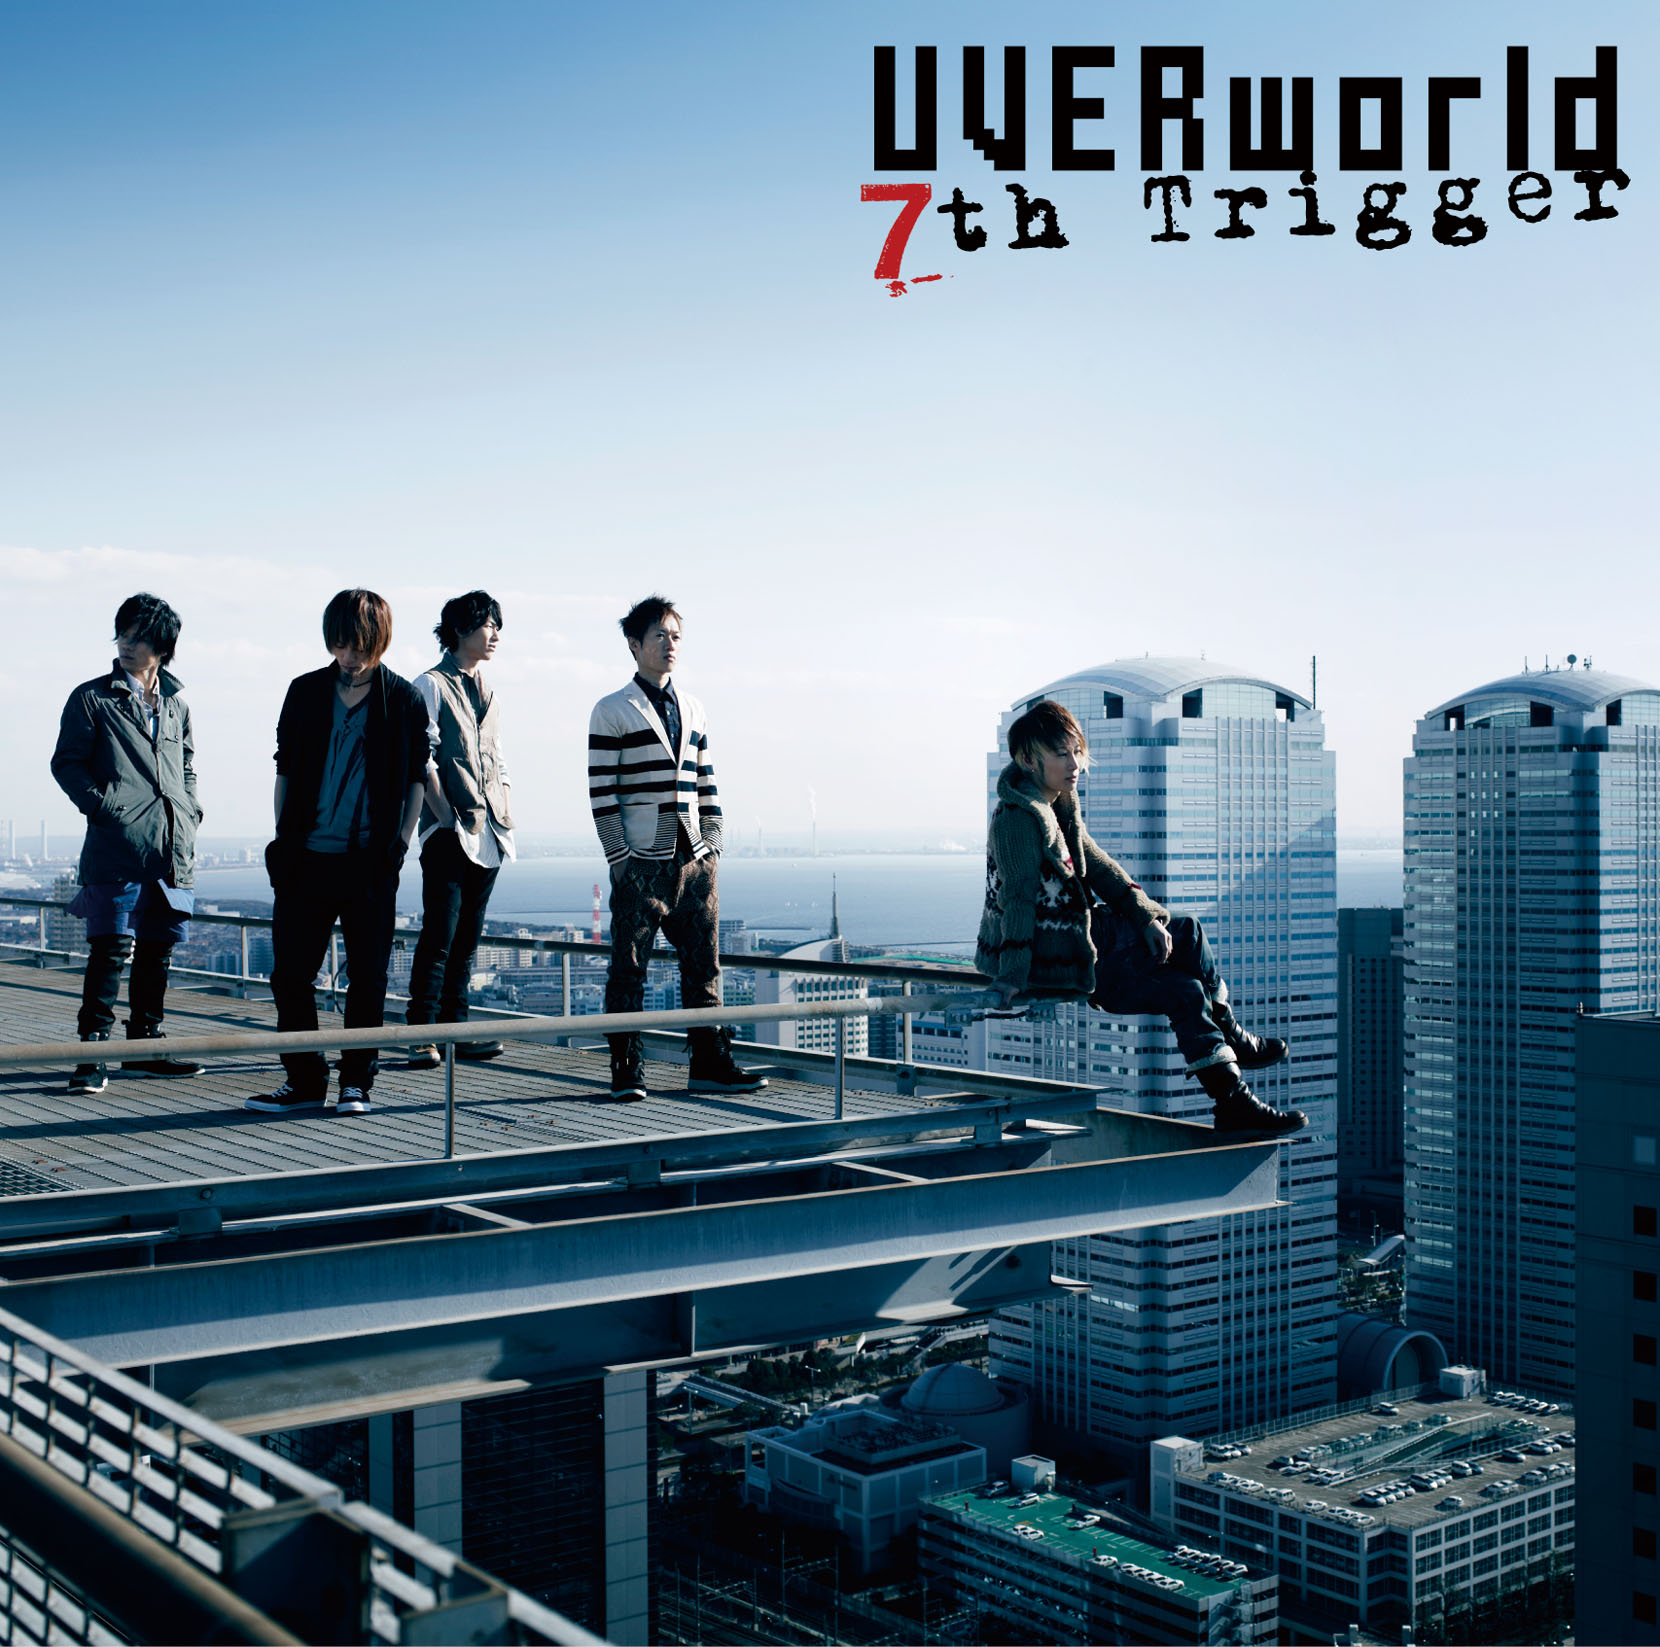 UVERworld 2011 Premium LIVE on Xmas〈2枚組〉